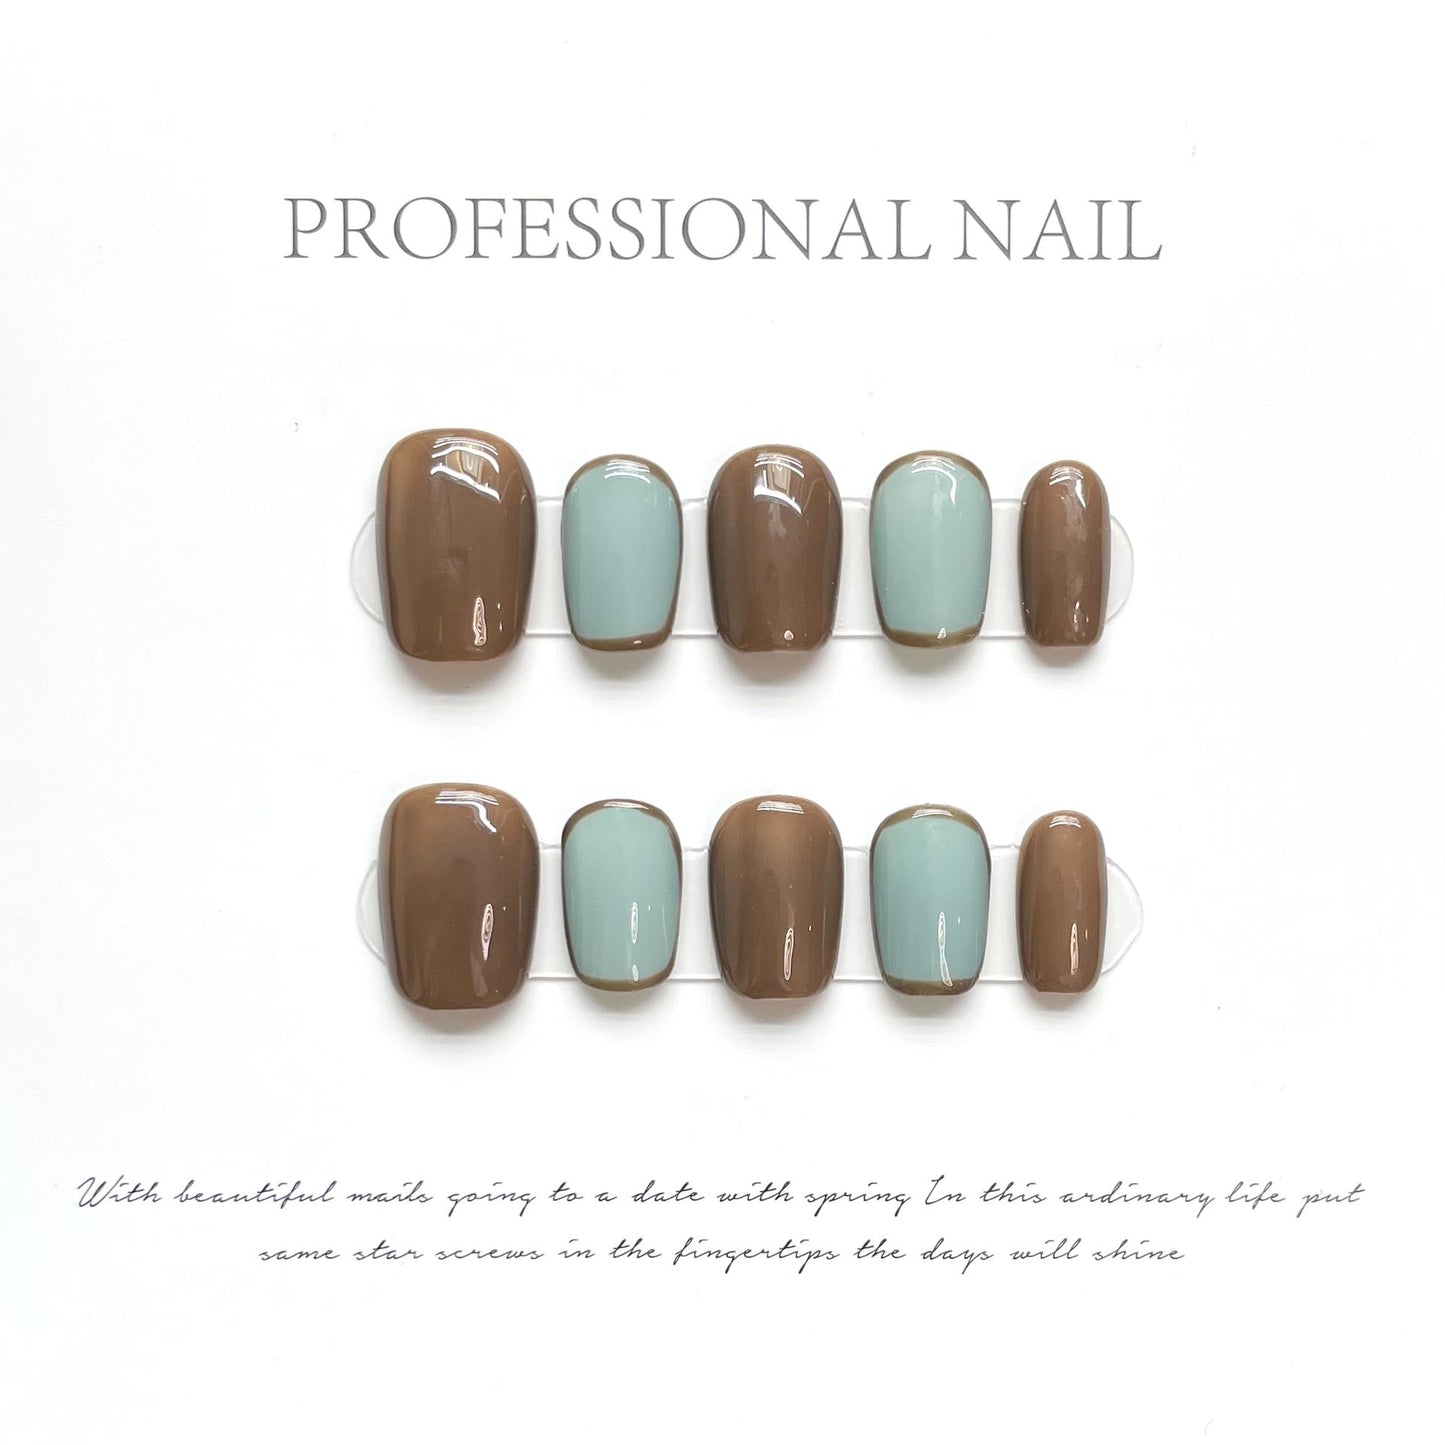 984 autumn style press on nails 100% handmade false nails brown blue